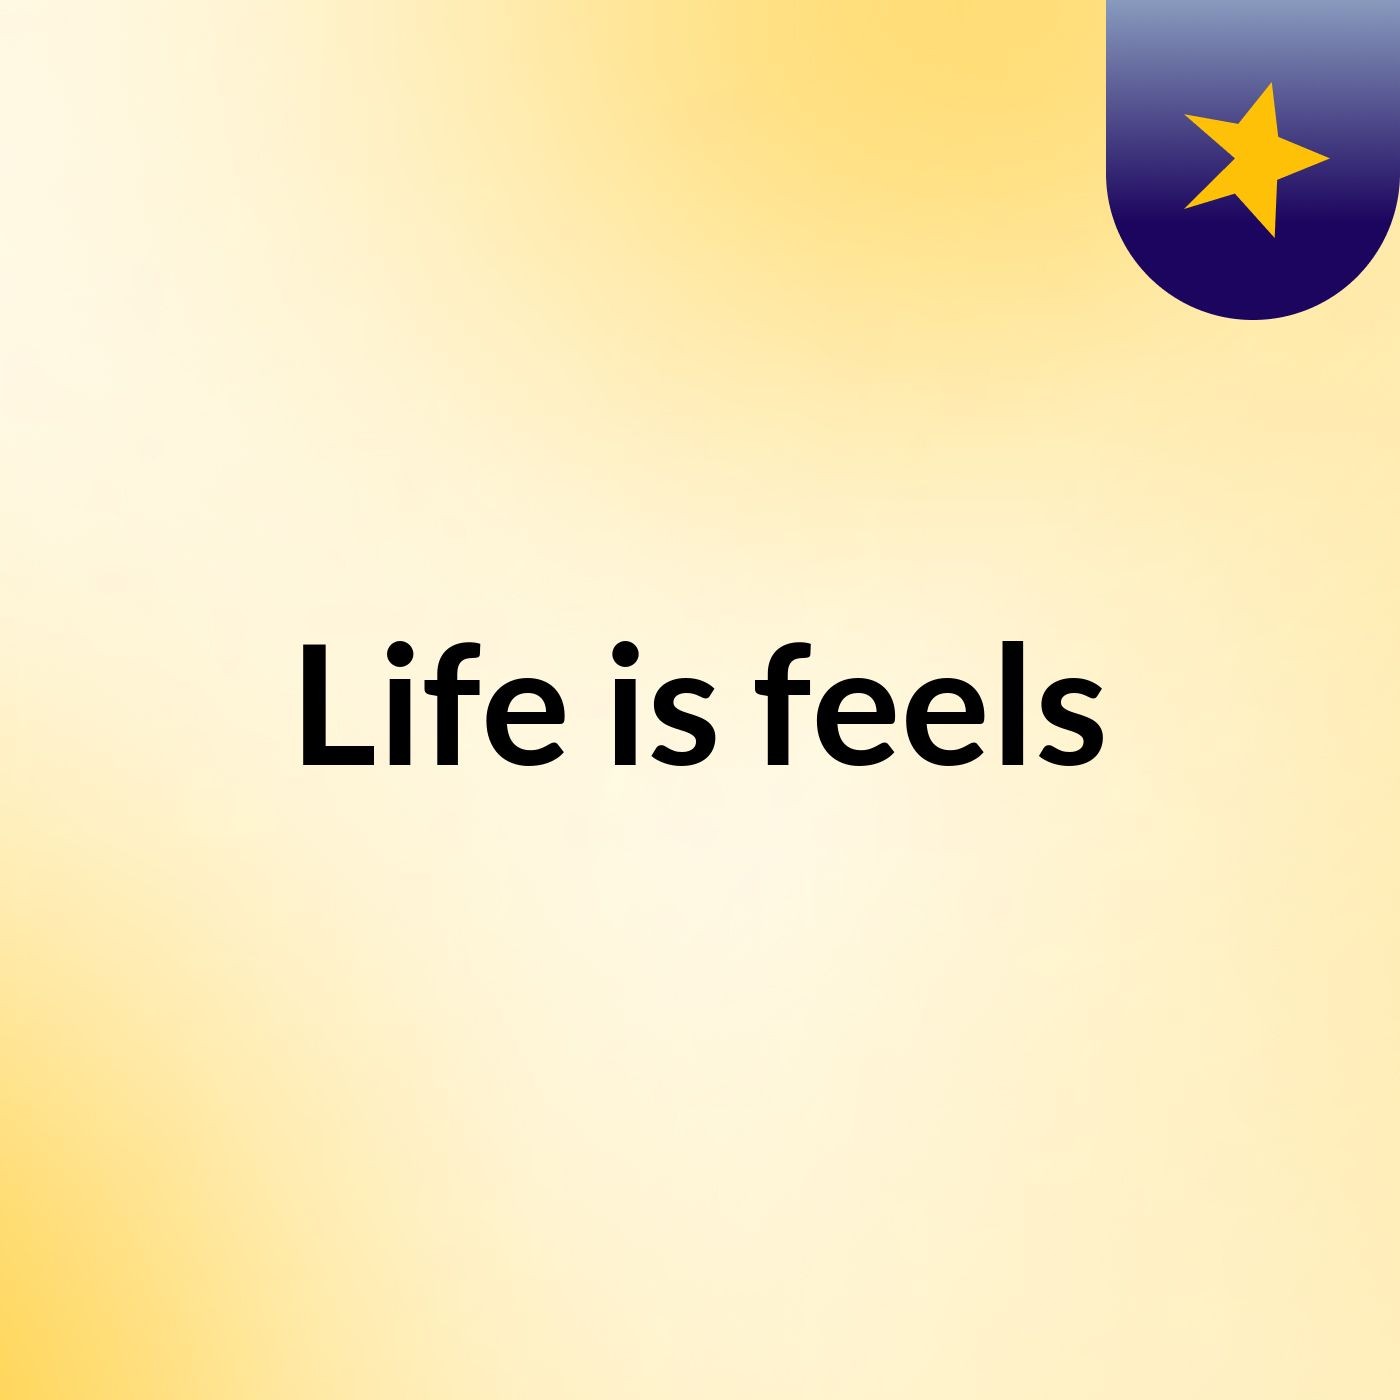 Life is feels